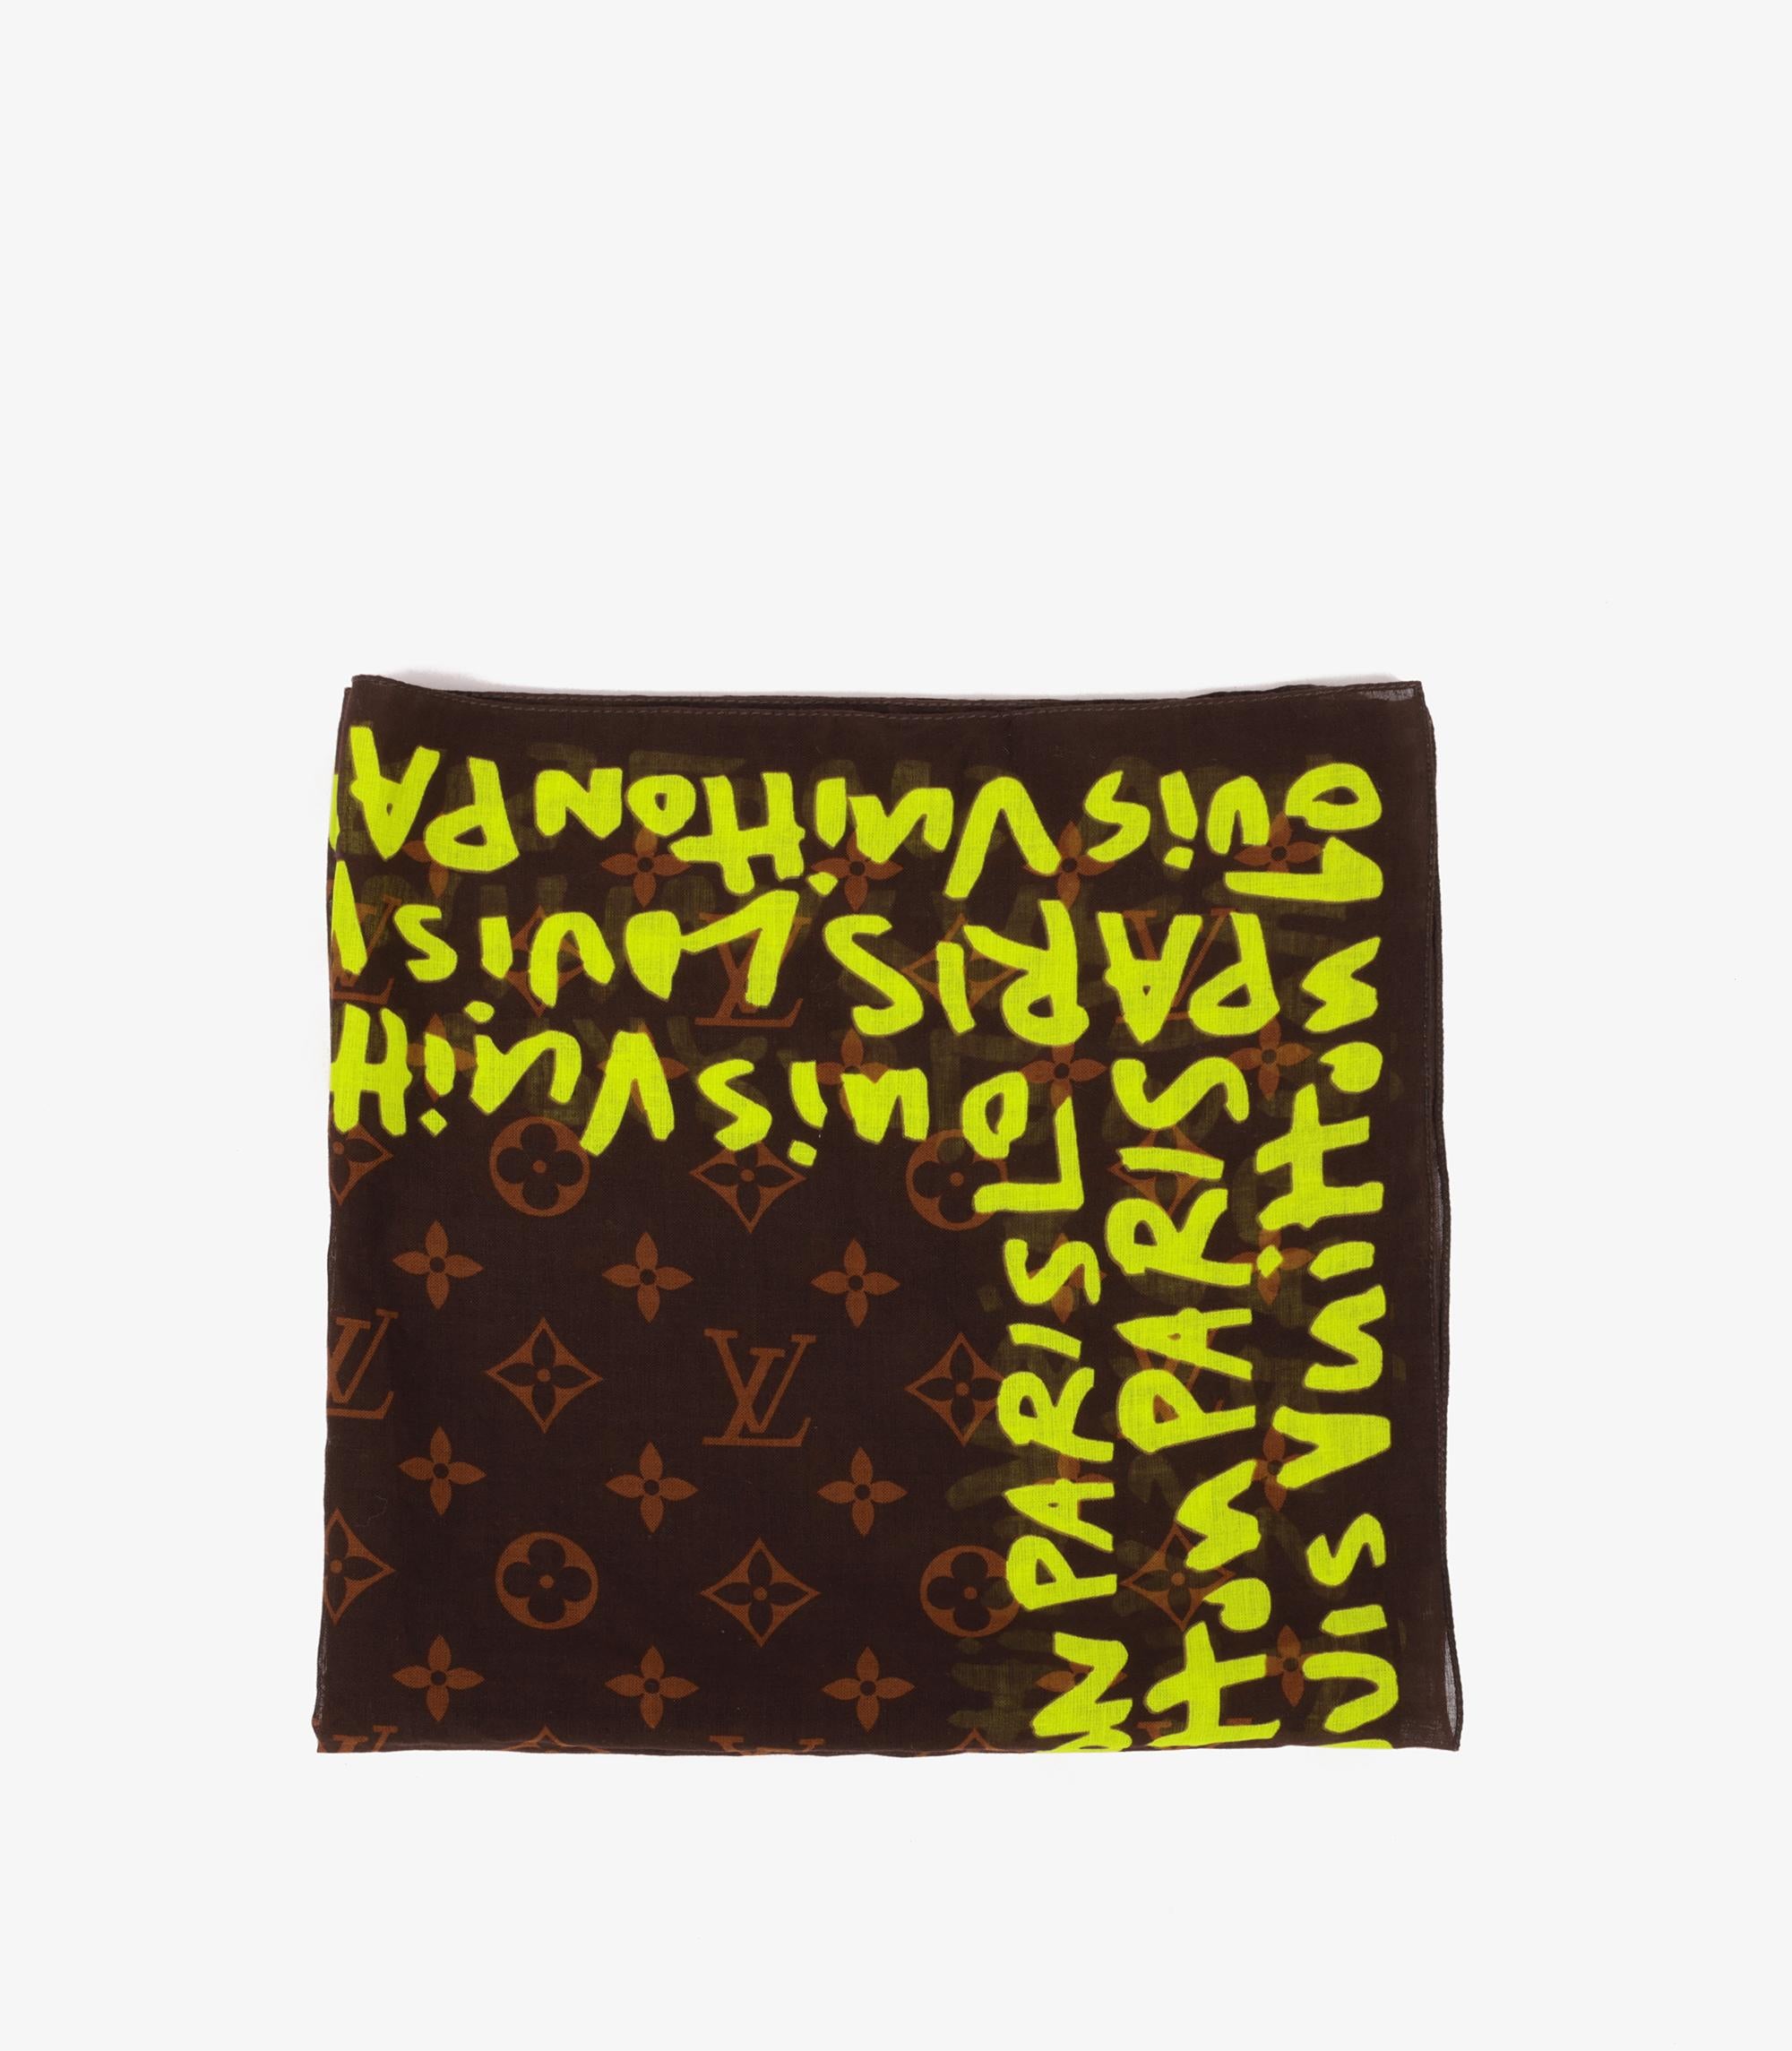 Louis Vuitton Braunes Monogramm Neongelbes Graffiti Stephen Sprouse Bandana

Marke - Louis Vuitton
Modell- Bandana
Produkttyp- Schal
Seriennummer - 40****
Begleitet von - Louis Vuitton Box, Staubbeutel
Farbe - Braun, Neongelb
MATERIAL(e)-